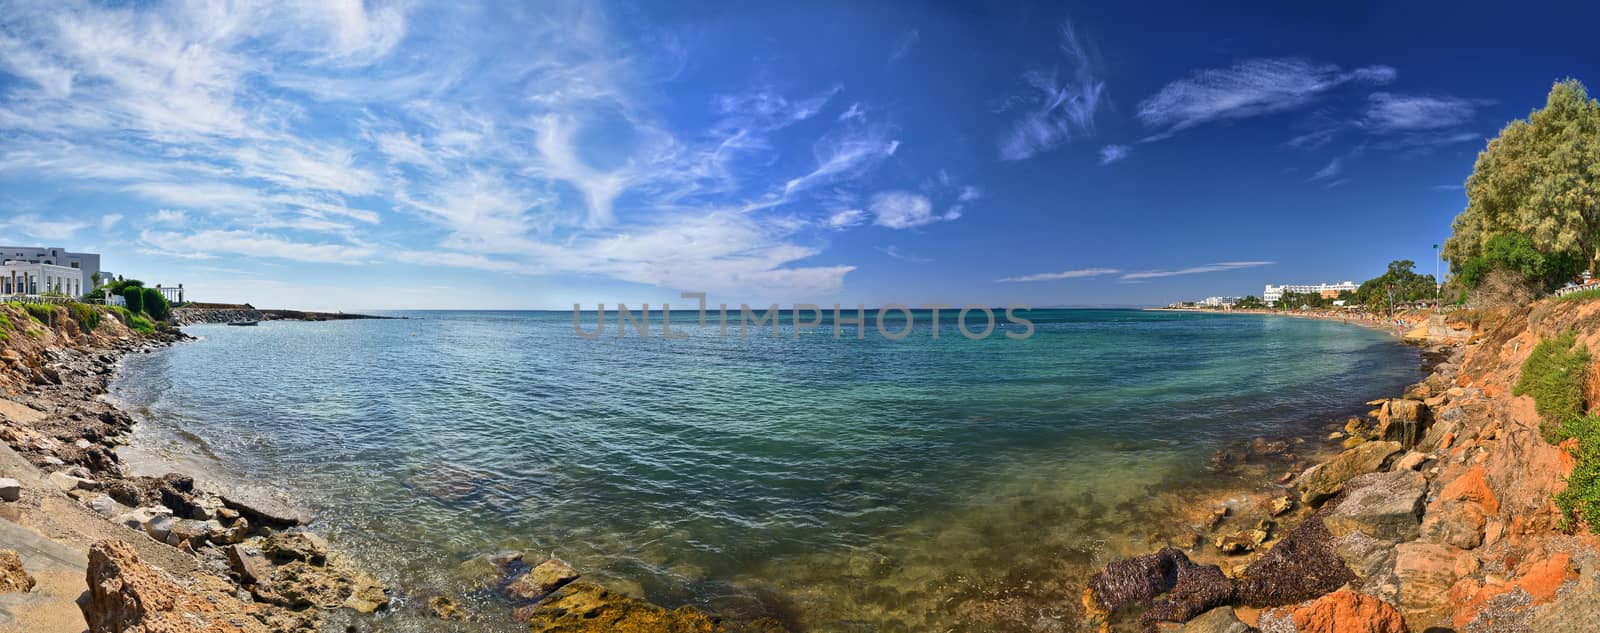 Rocky beach, Hammamet, Tunisia, Mediterranean Sea, Africa, HDR P by Eagle2308